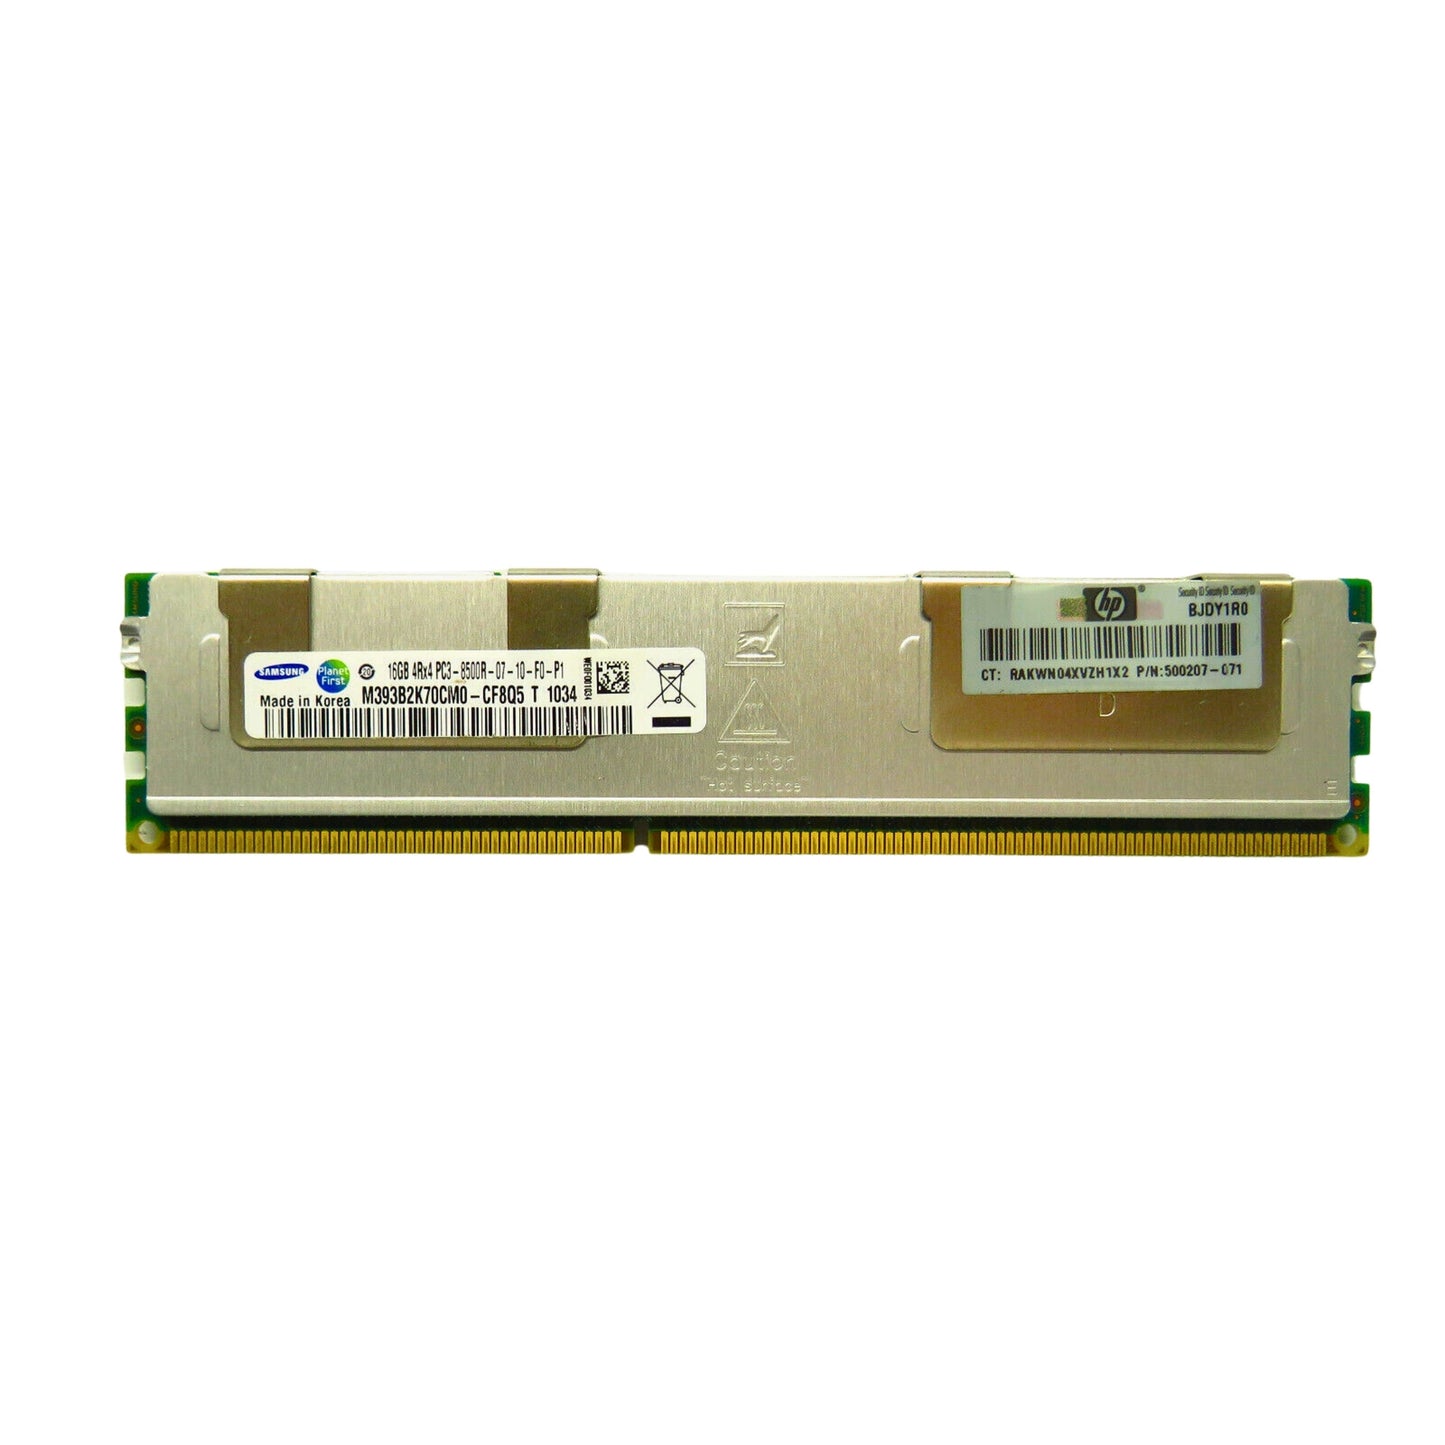 HP 500207-071 16GB 4Rx4 PC3-8500R 1066MHz DDR3 ECC RDIMM Server Memory (Refurbished)